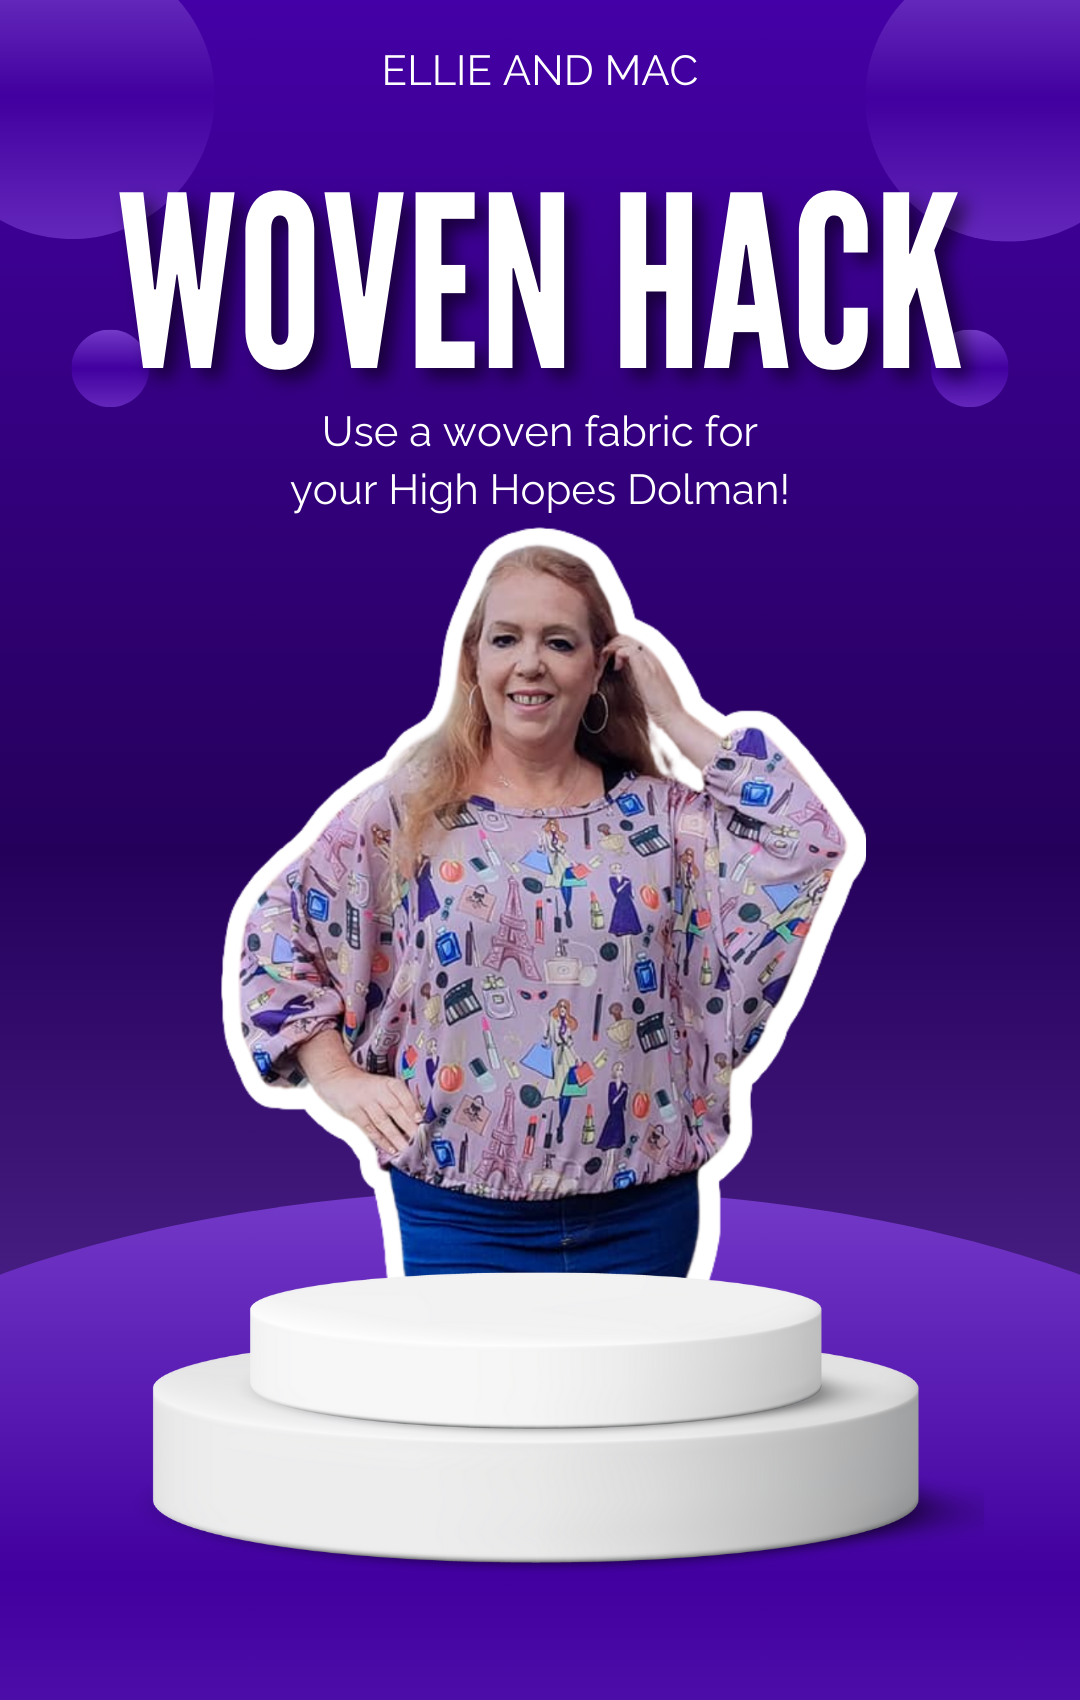 High Hopes Dolman Hack: Use Woven Fabric!